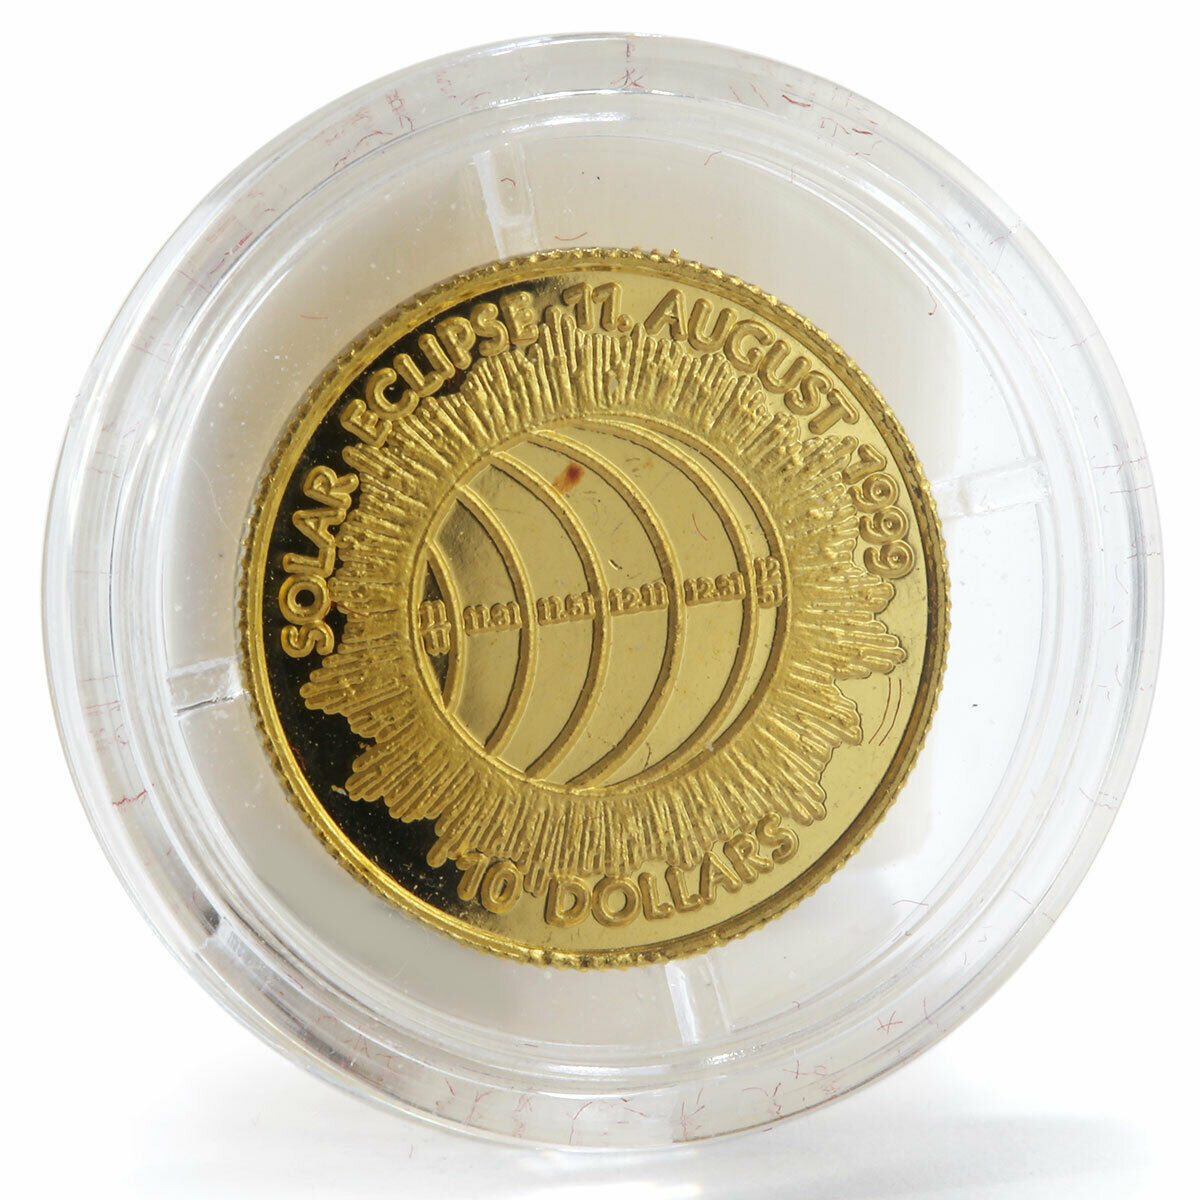 Eclipse coin